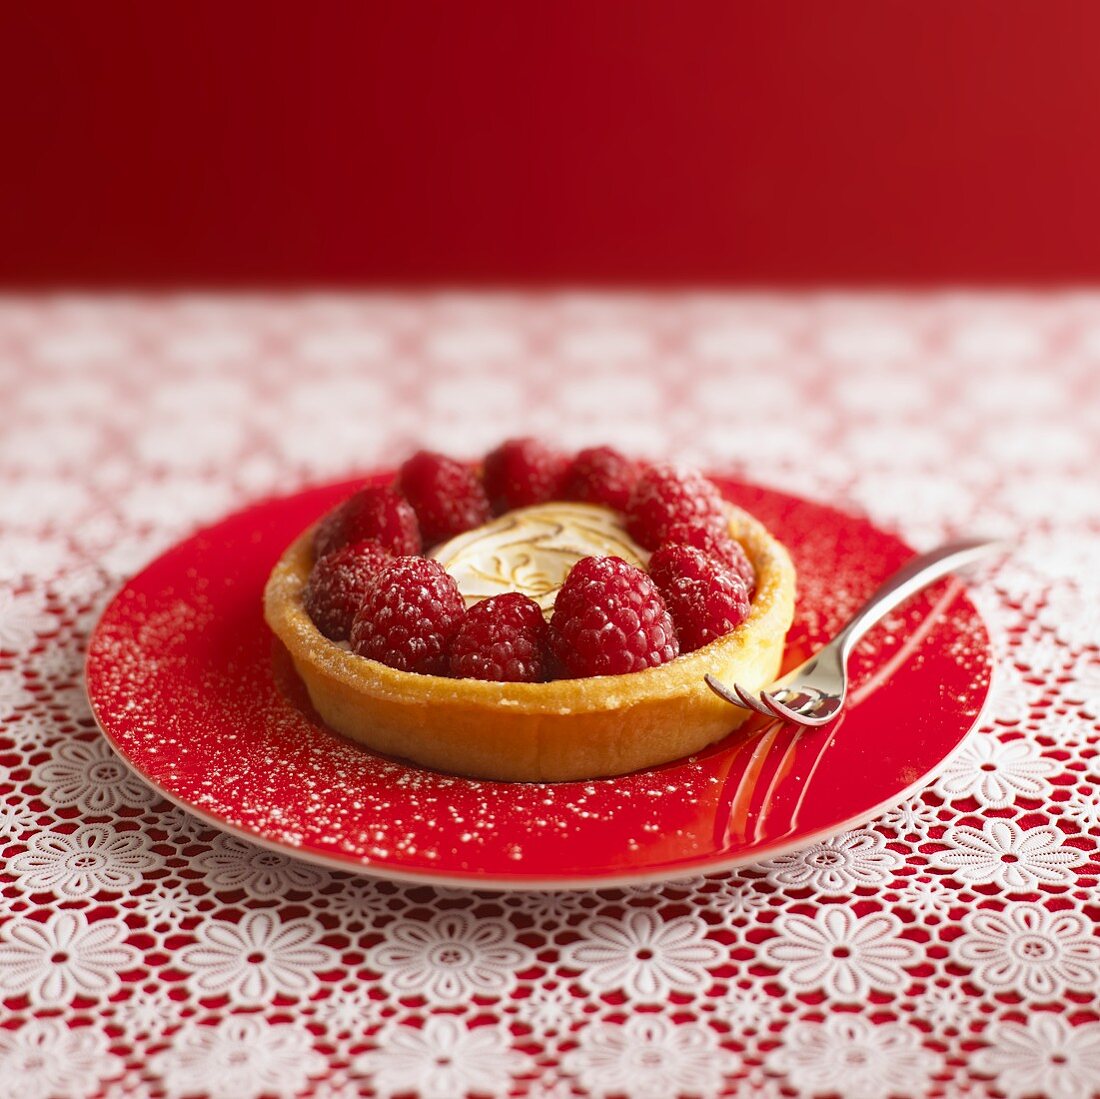 Lemon meringue tart with raspberries